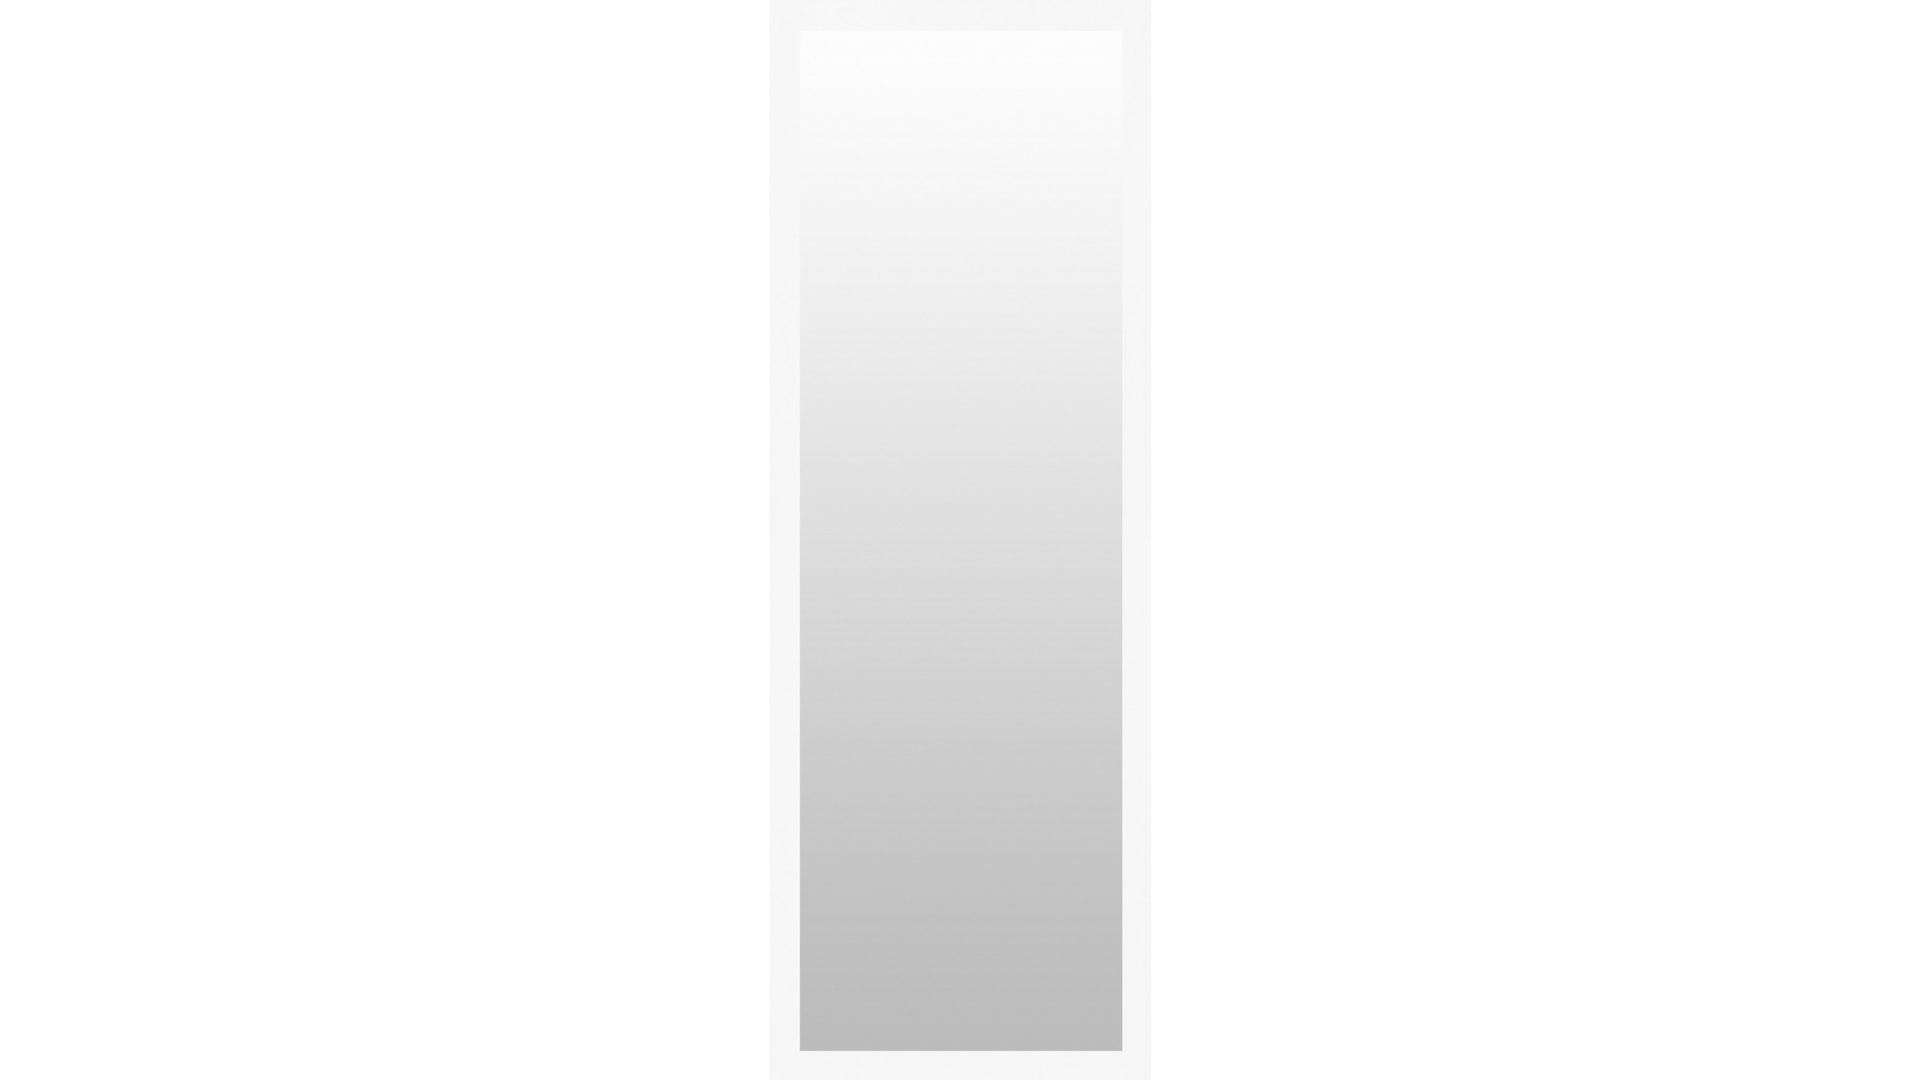 Wandspiegel Len-fra aus Kunststoff Spiegel in Weiß LEN-FRA Wandspiegel Garderobenspiegel Nina weisser Kunststoffrahmen - ca. 49 x 139 cm